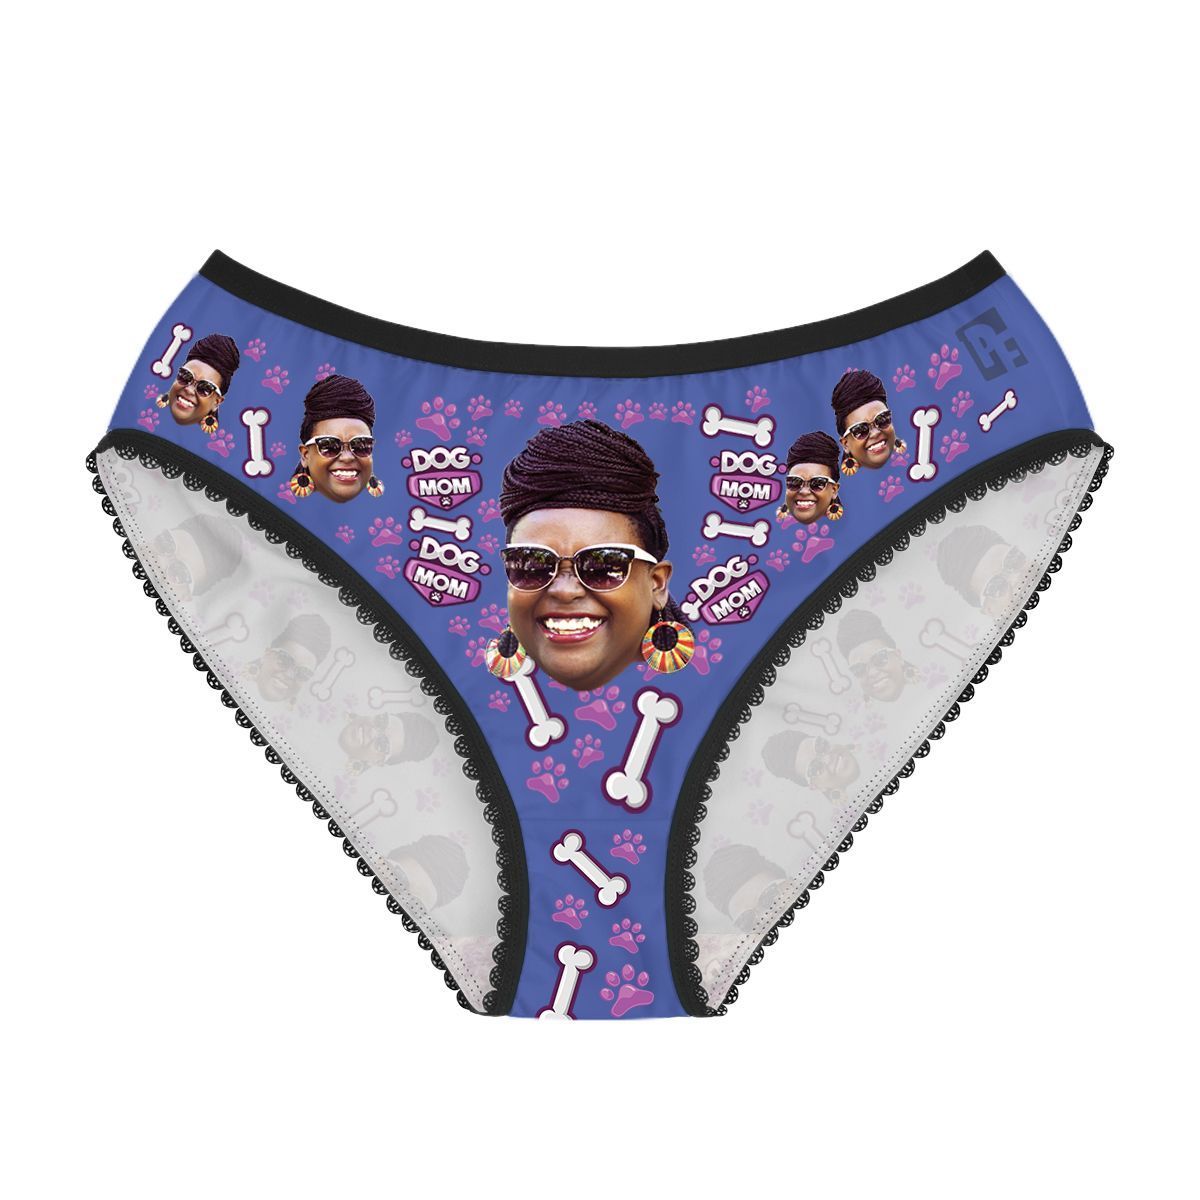 Darkblue Dog mom women's underwear briefs personalized with photo printed on them